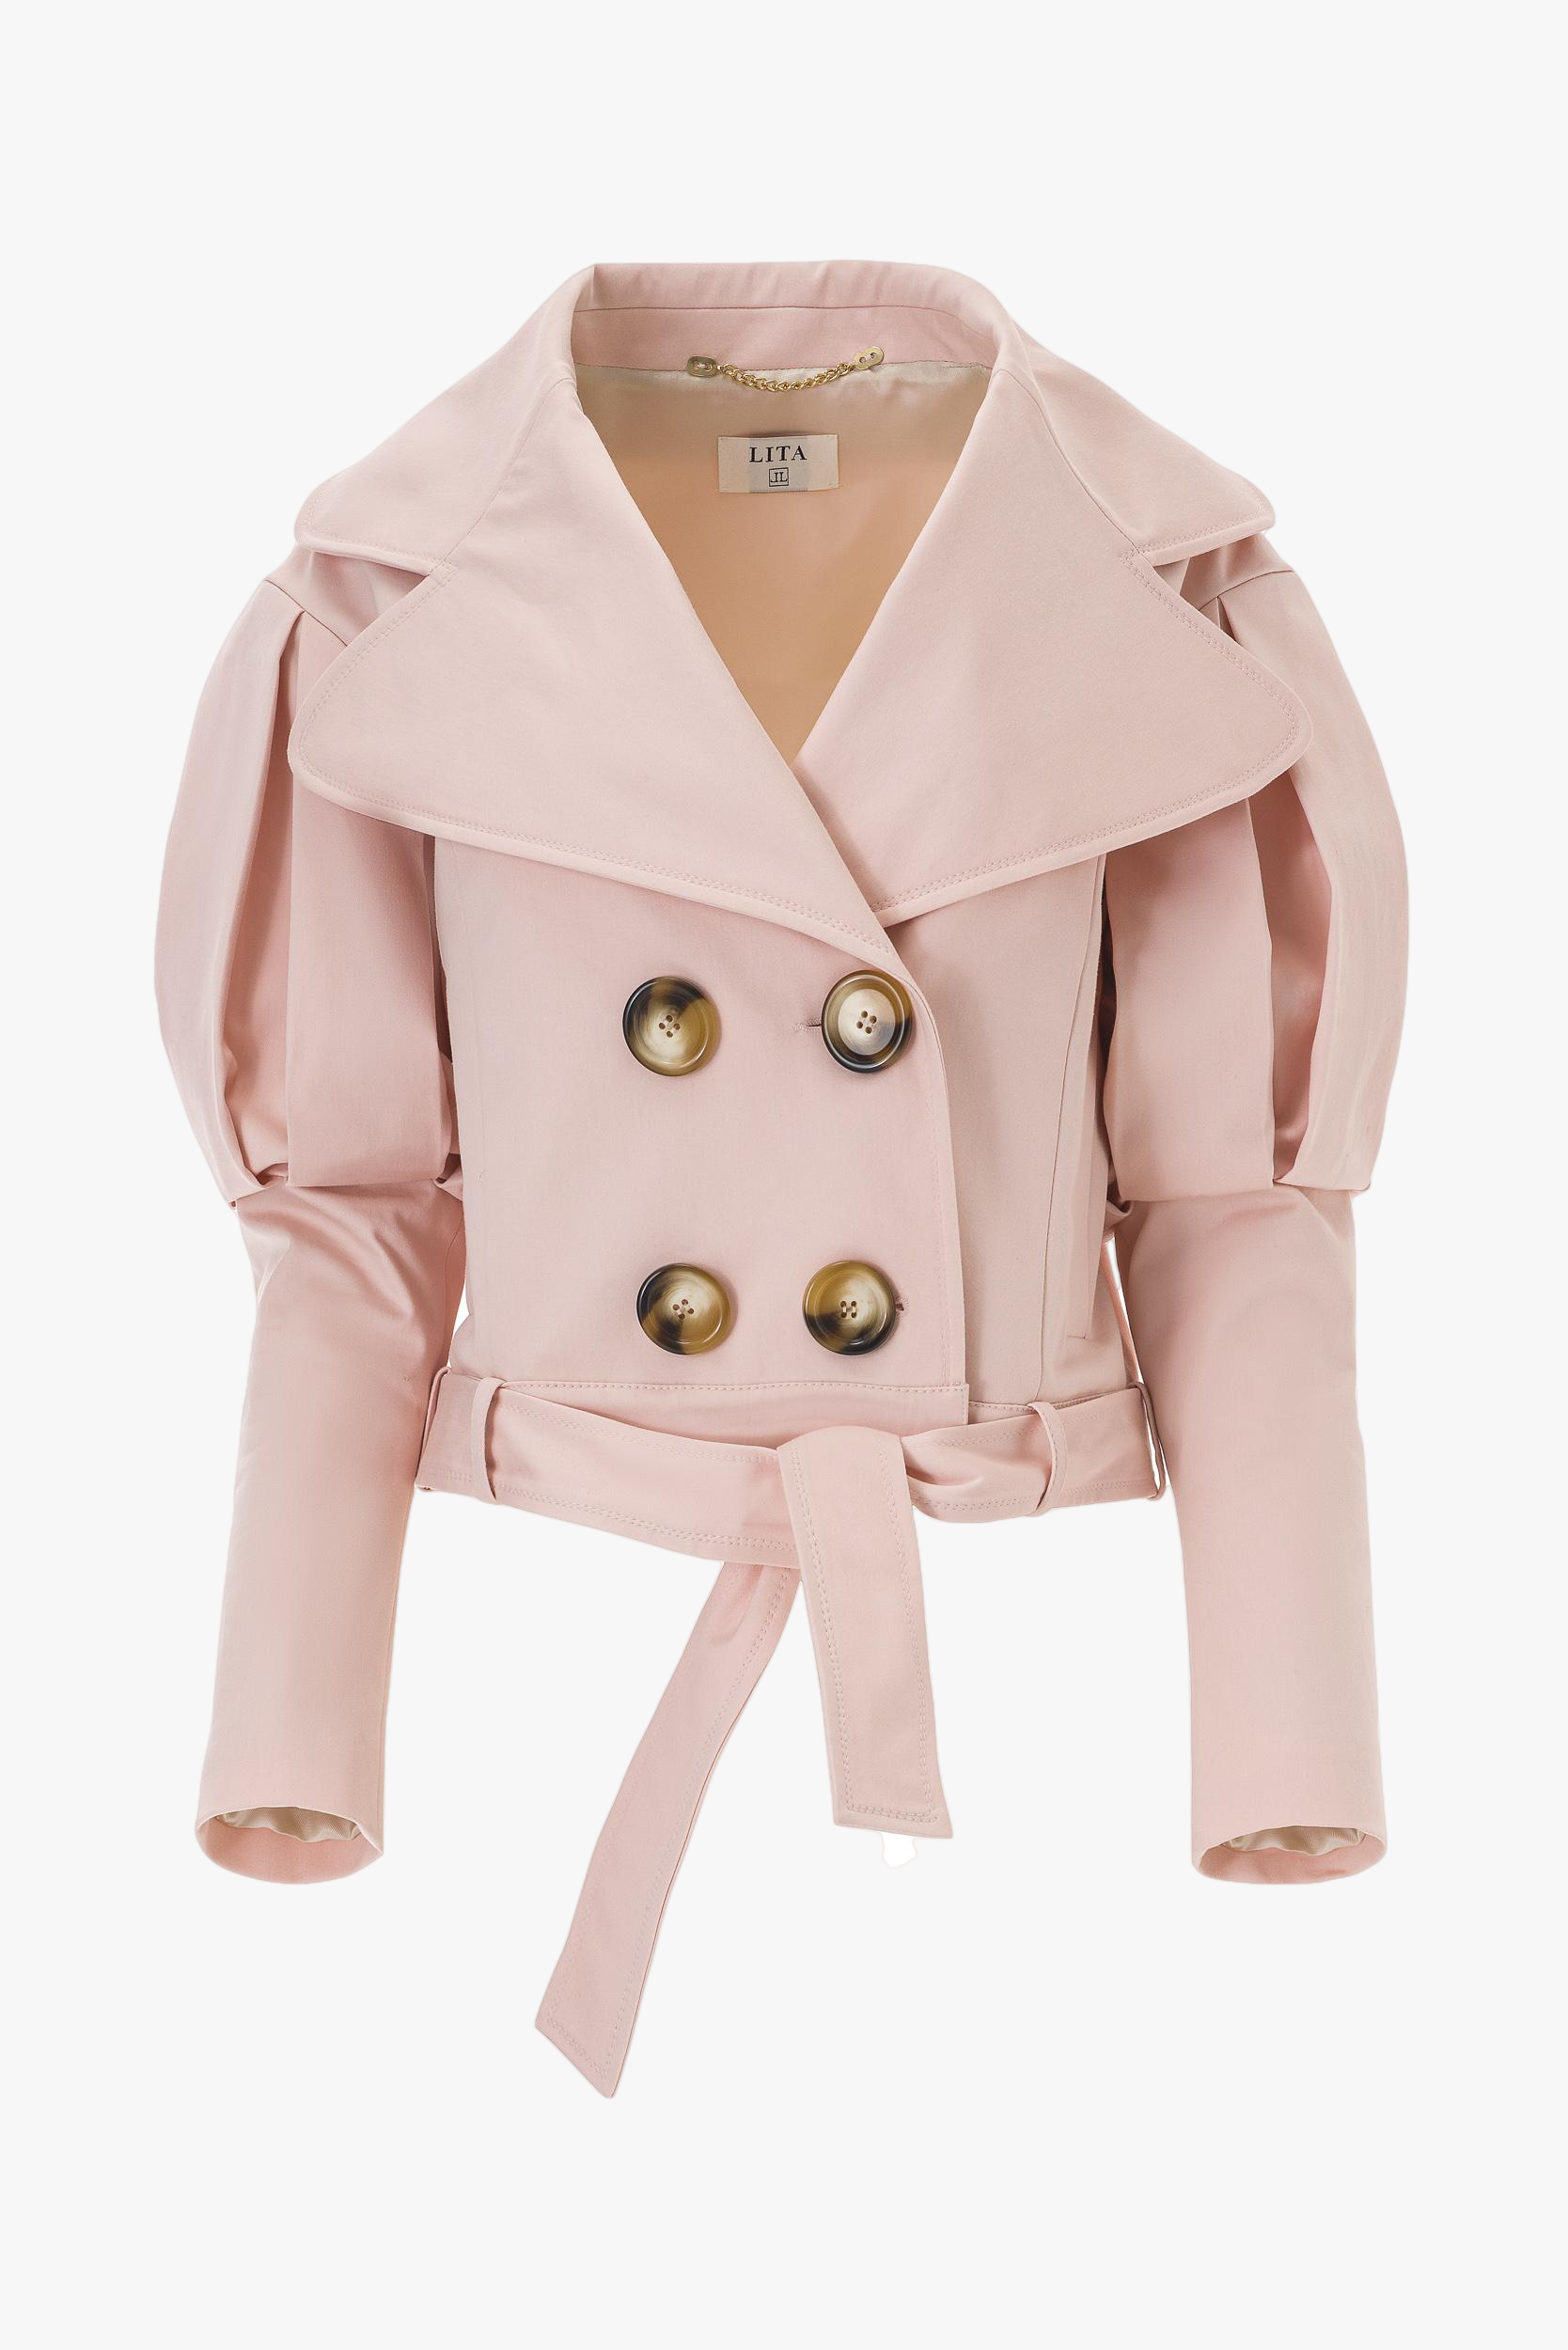 Pink Leather Short Sleeves Cropped Jacket - Maker of Jacket